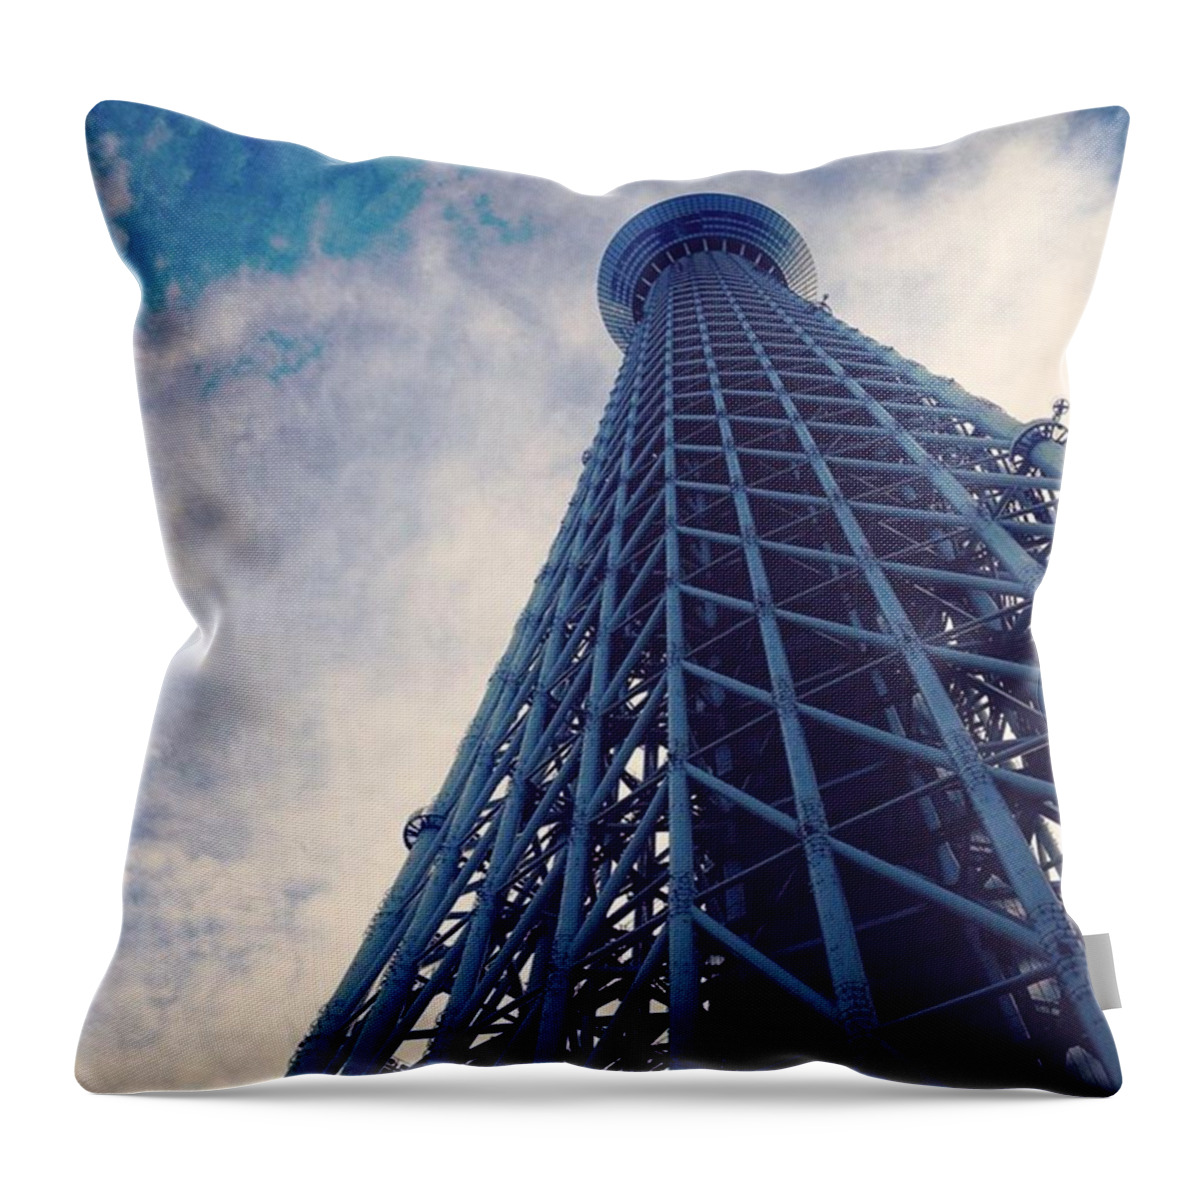 Sky Tree Throw Pillow featuring the photograph Skytree Tower From The Bottom, Tokyo, Japan by Yoshiaki Tanaka